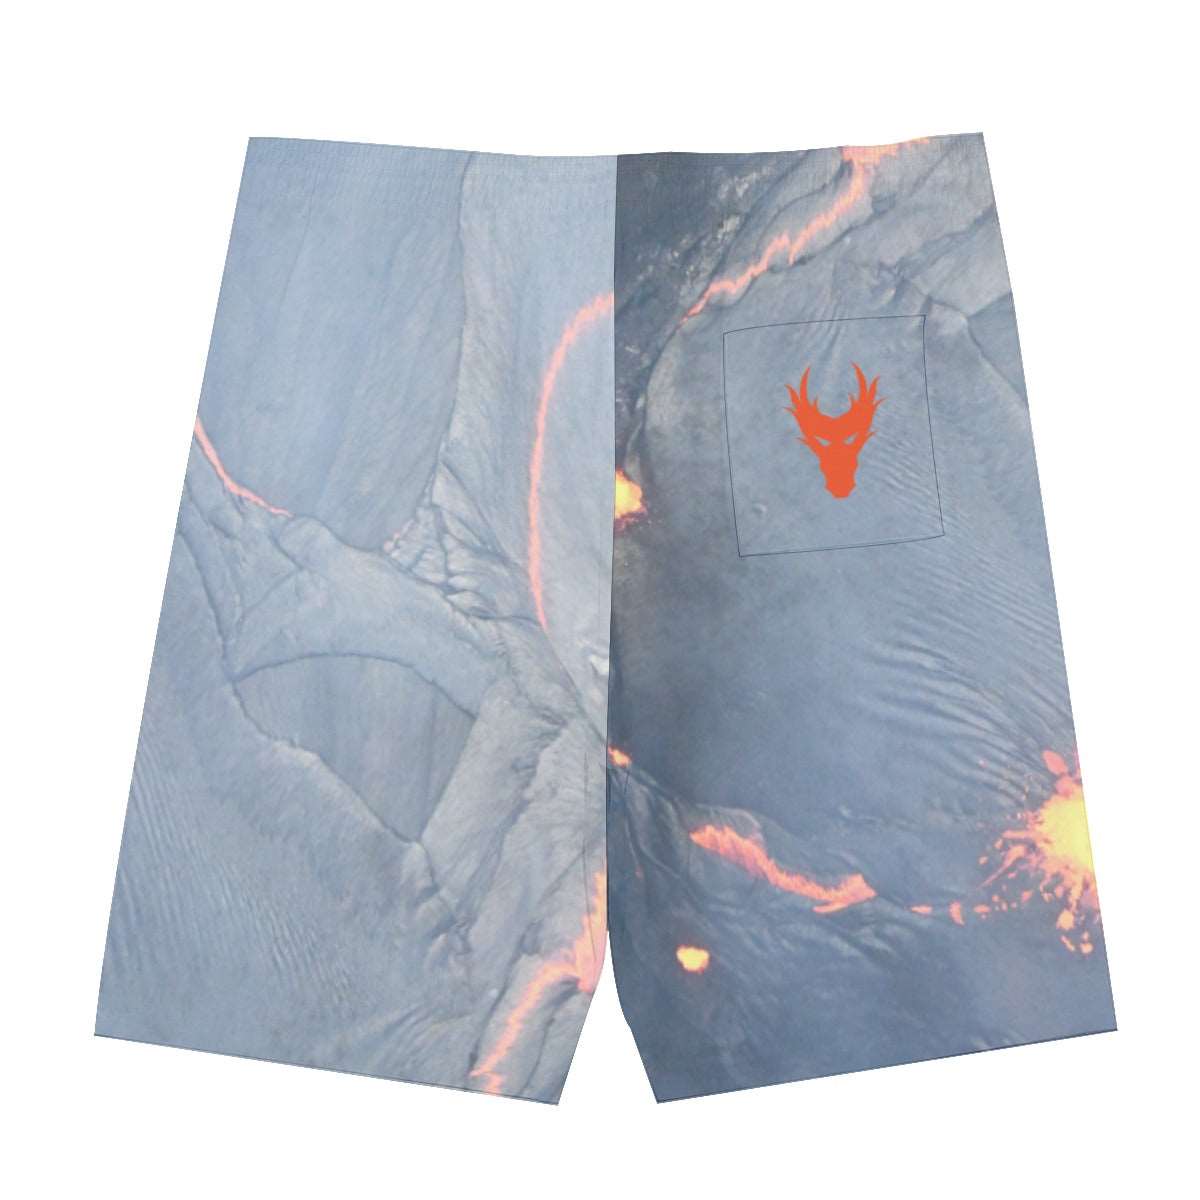 Dangerous ground burn orange dragon at your side Men's Sleeveless Vest And Shorts Sets